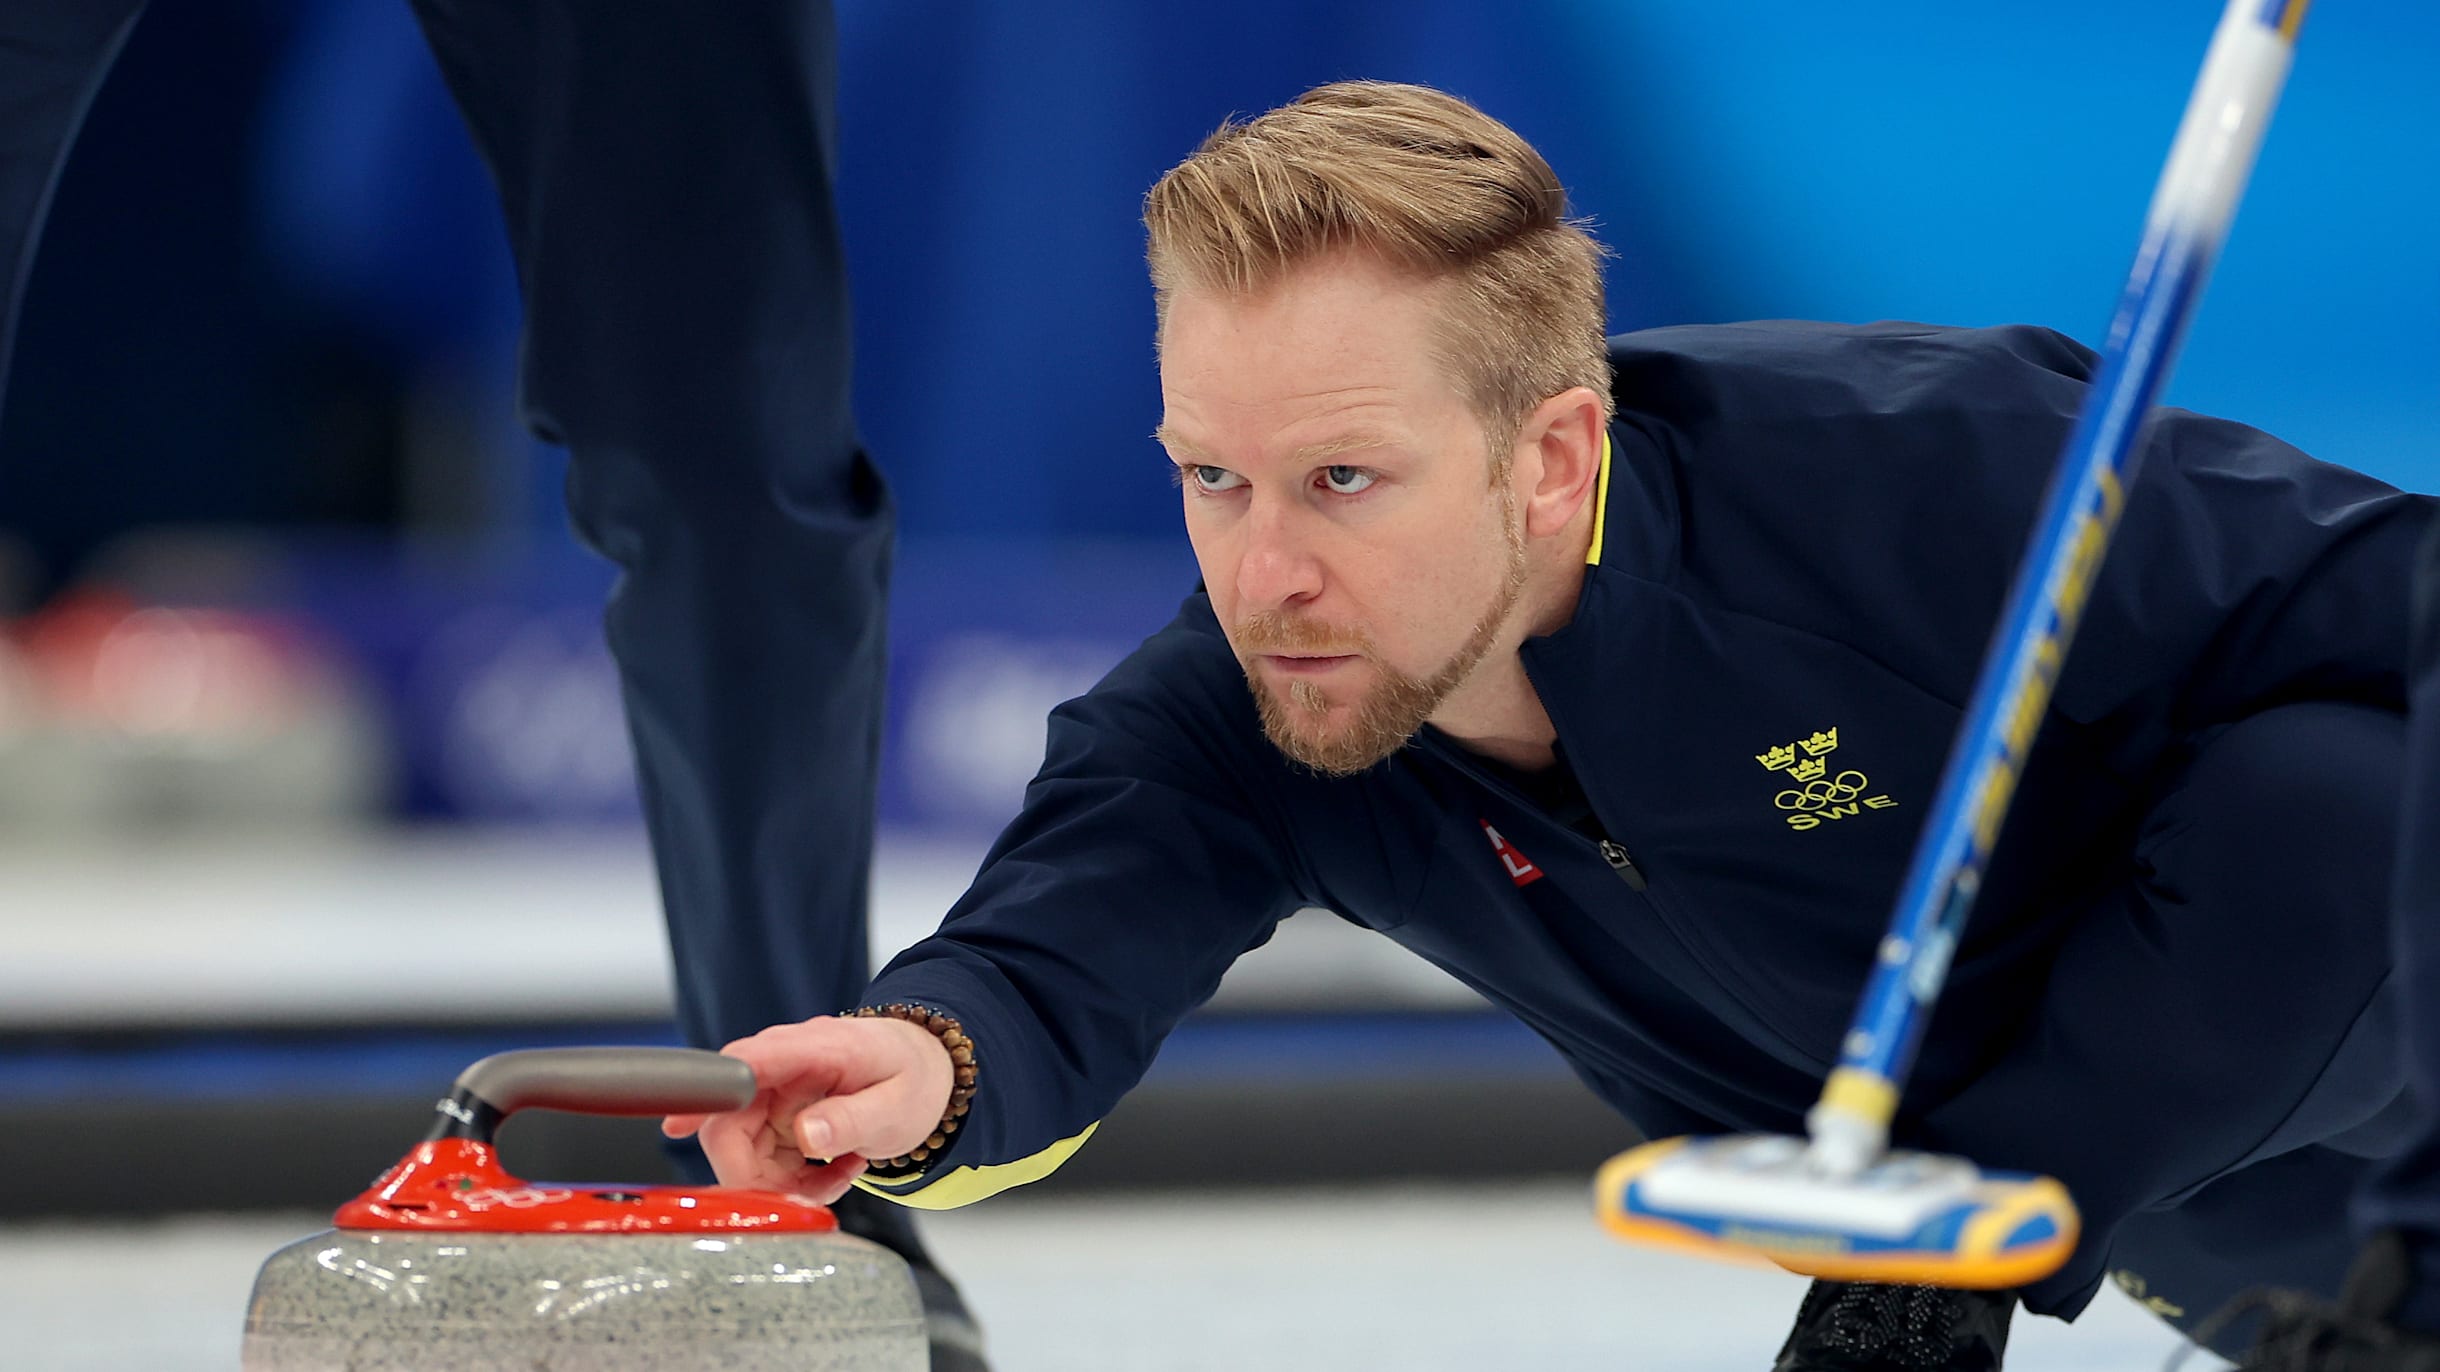 Mens curling final - Featuring Sweden